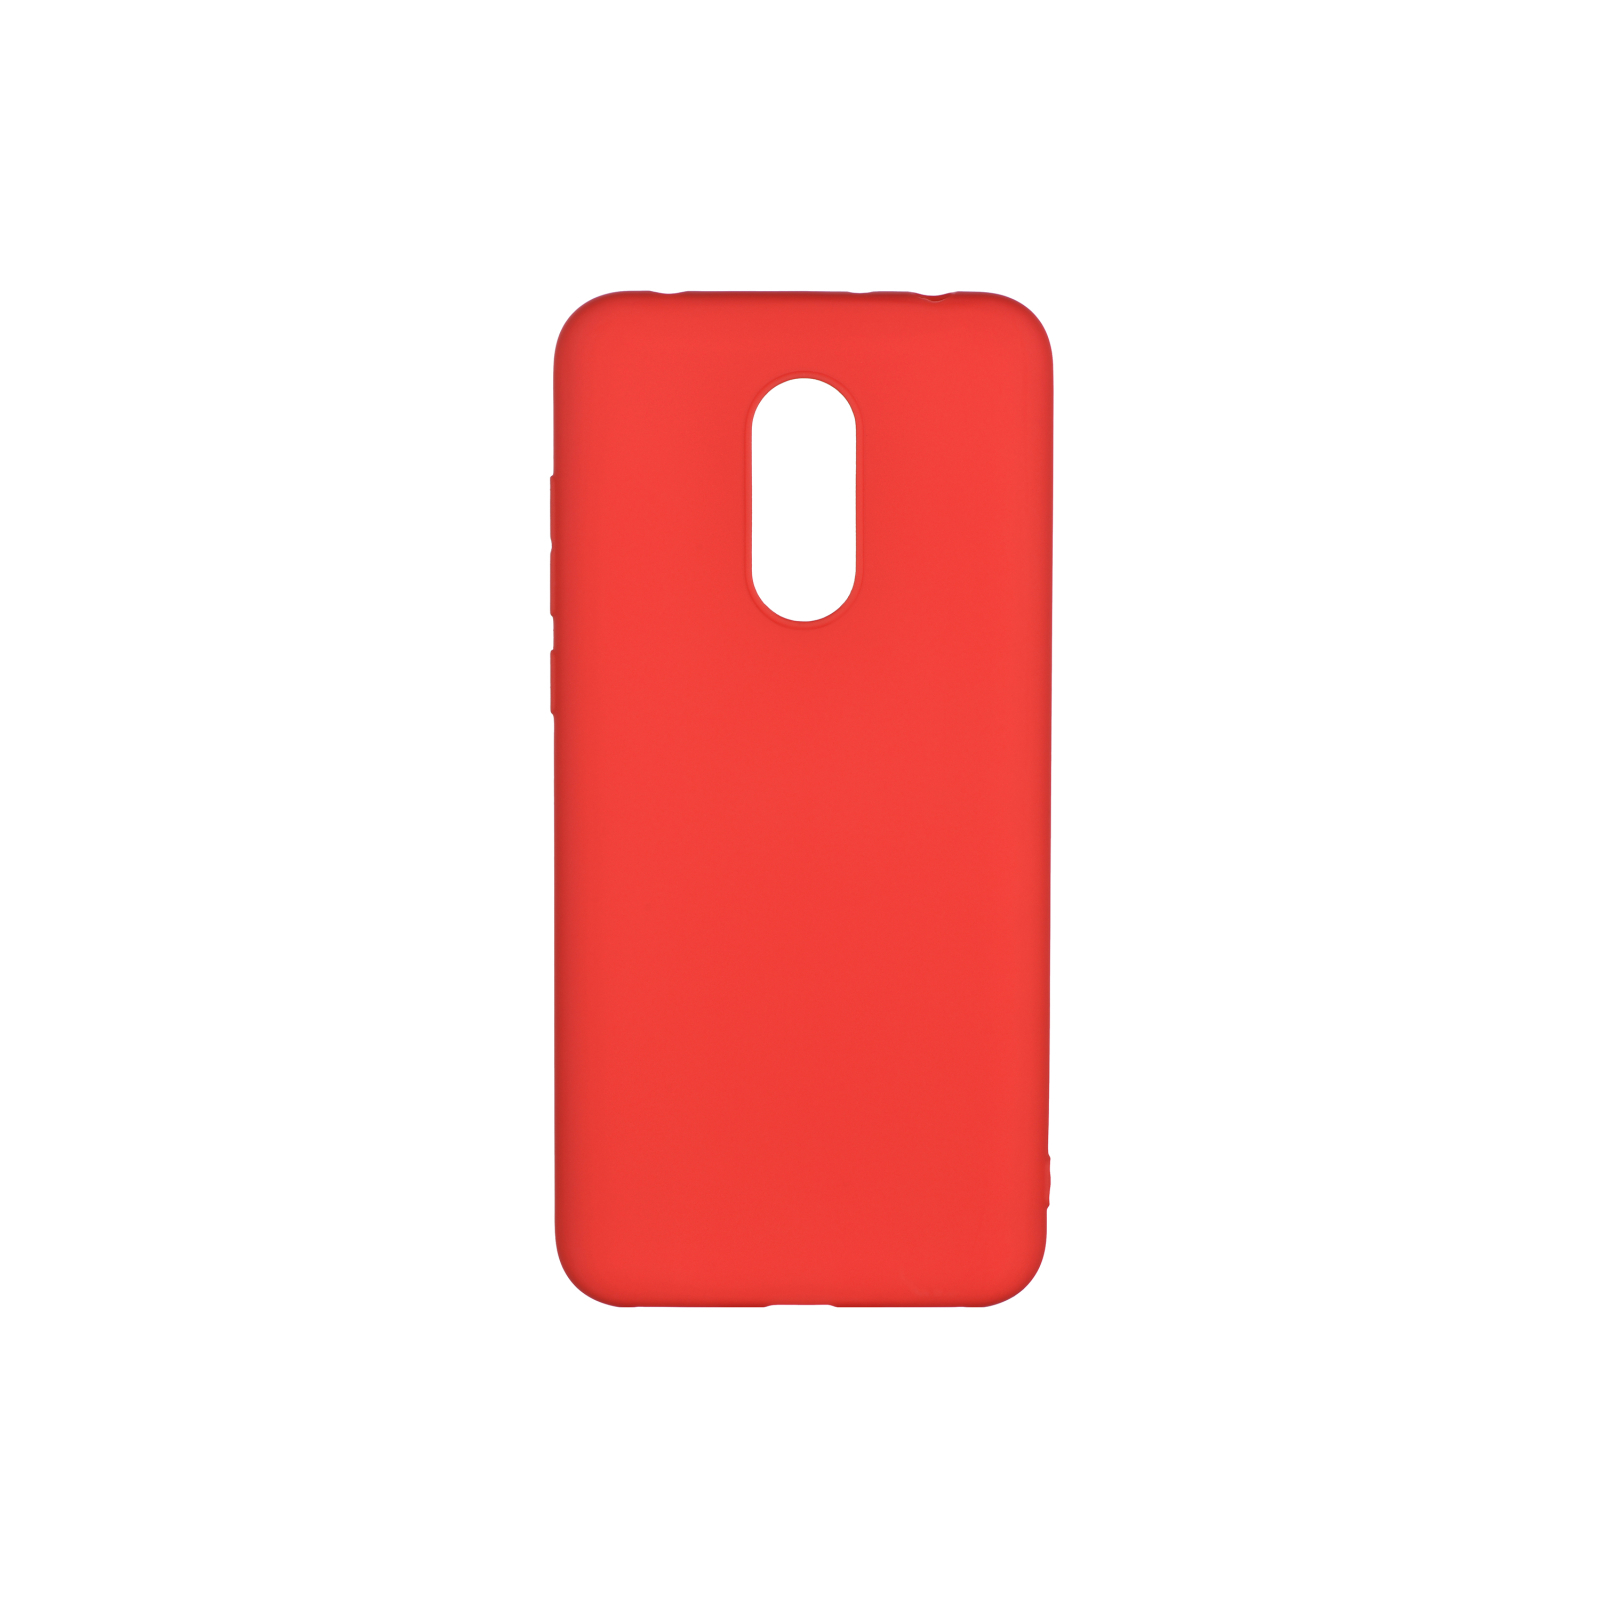 Чехол для мобильного телефона 2E Xiaomi Redmi 5 Plus, Soft touch, Red (2E-MI-5P-NKST-RD)